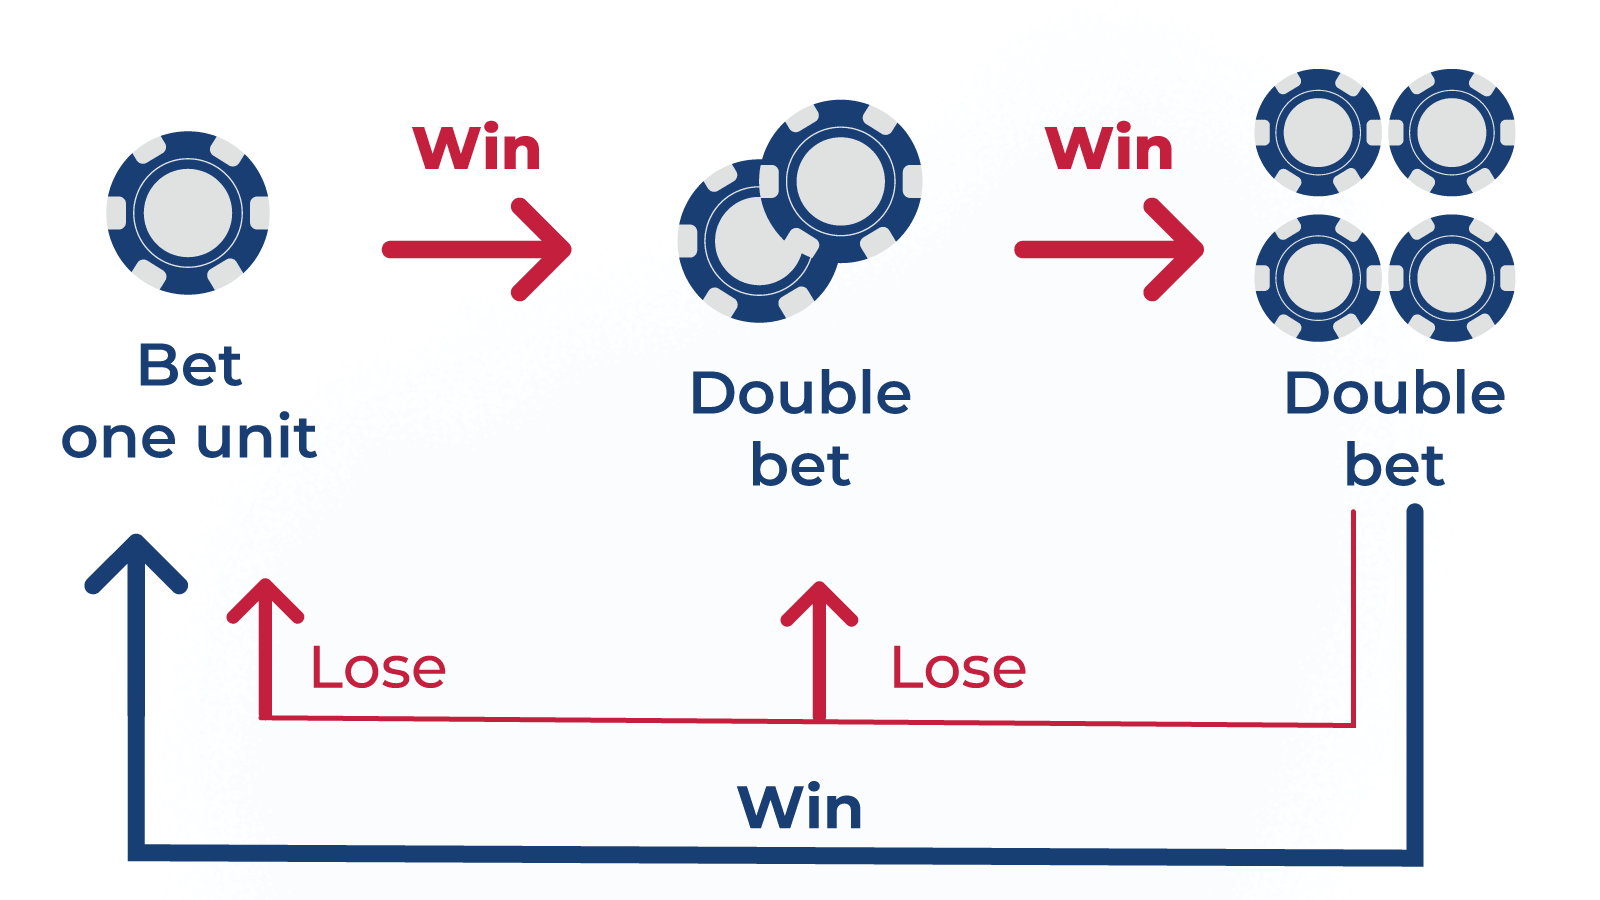 The Paroli betting system explained